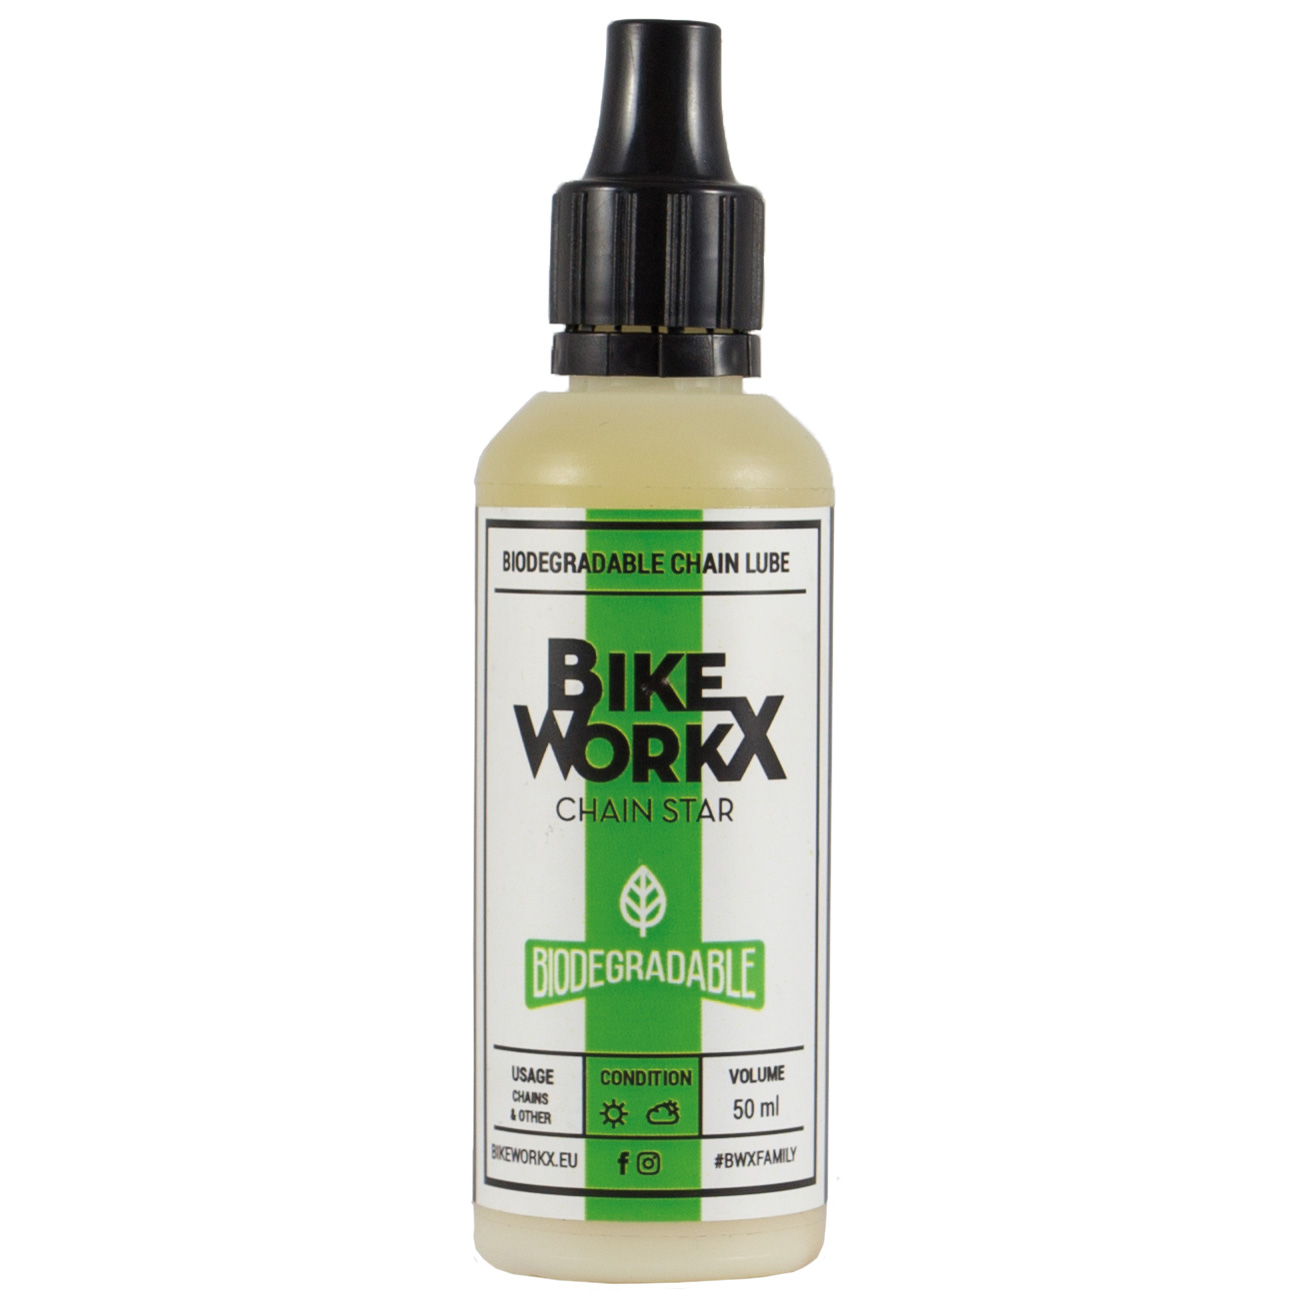 Image of BikeWorkx Chain Star Biodegradable - Chain Oil - Applicator - 50ml